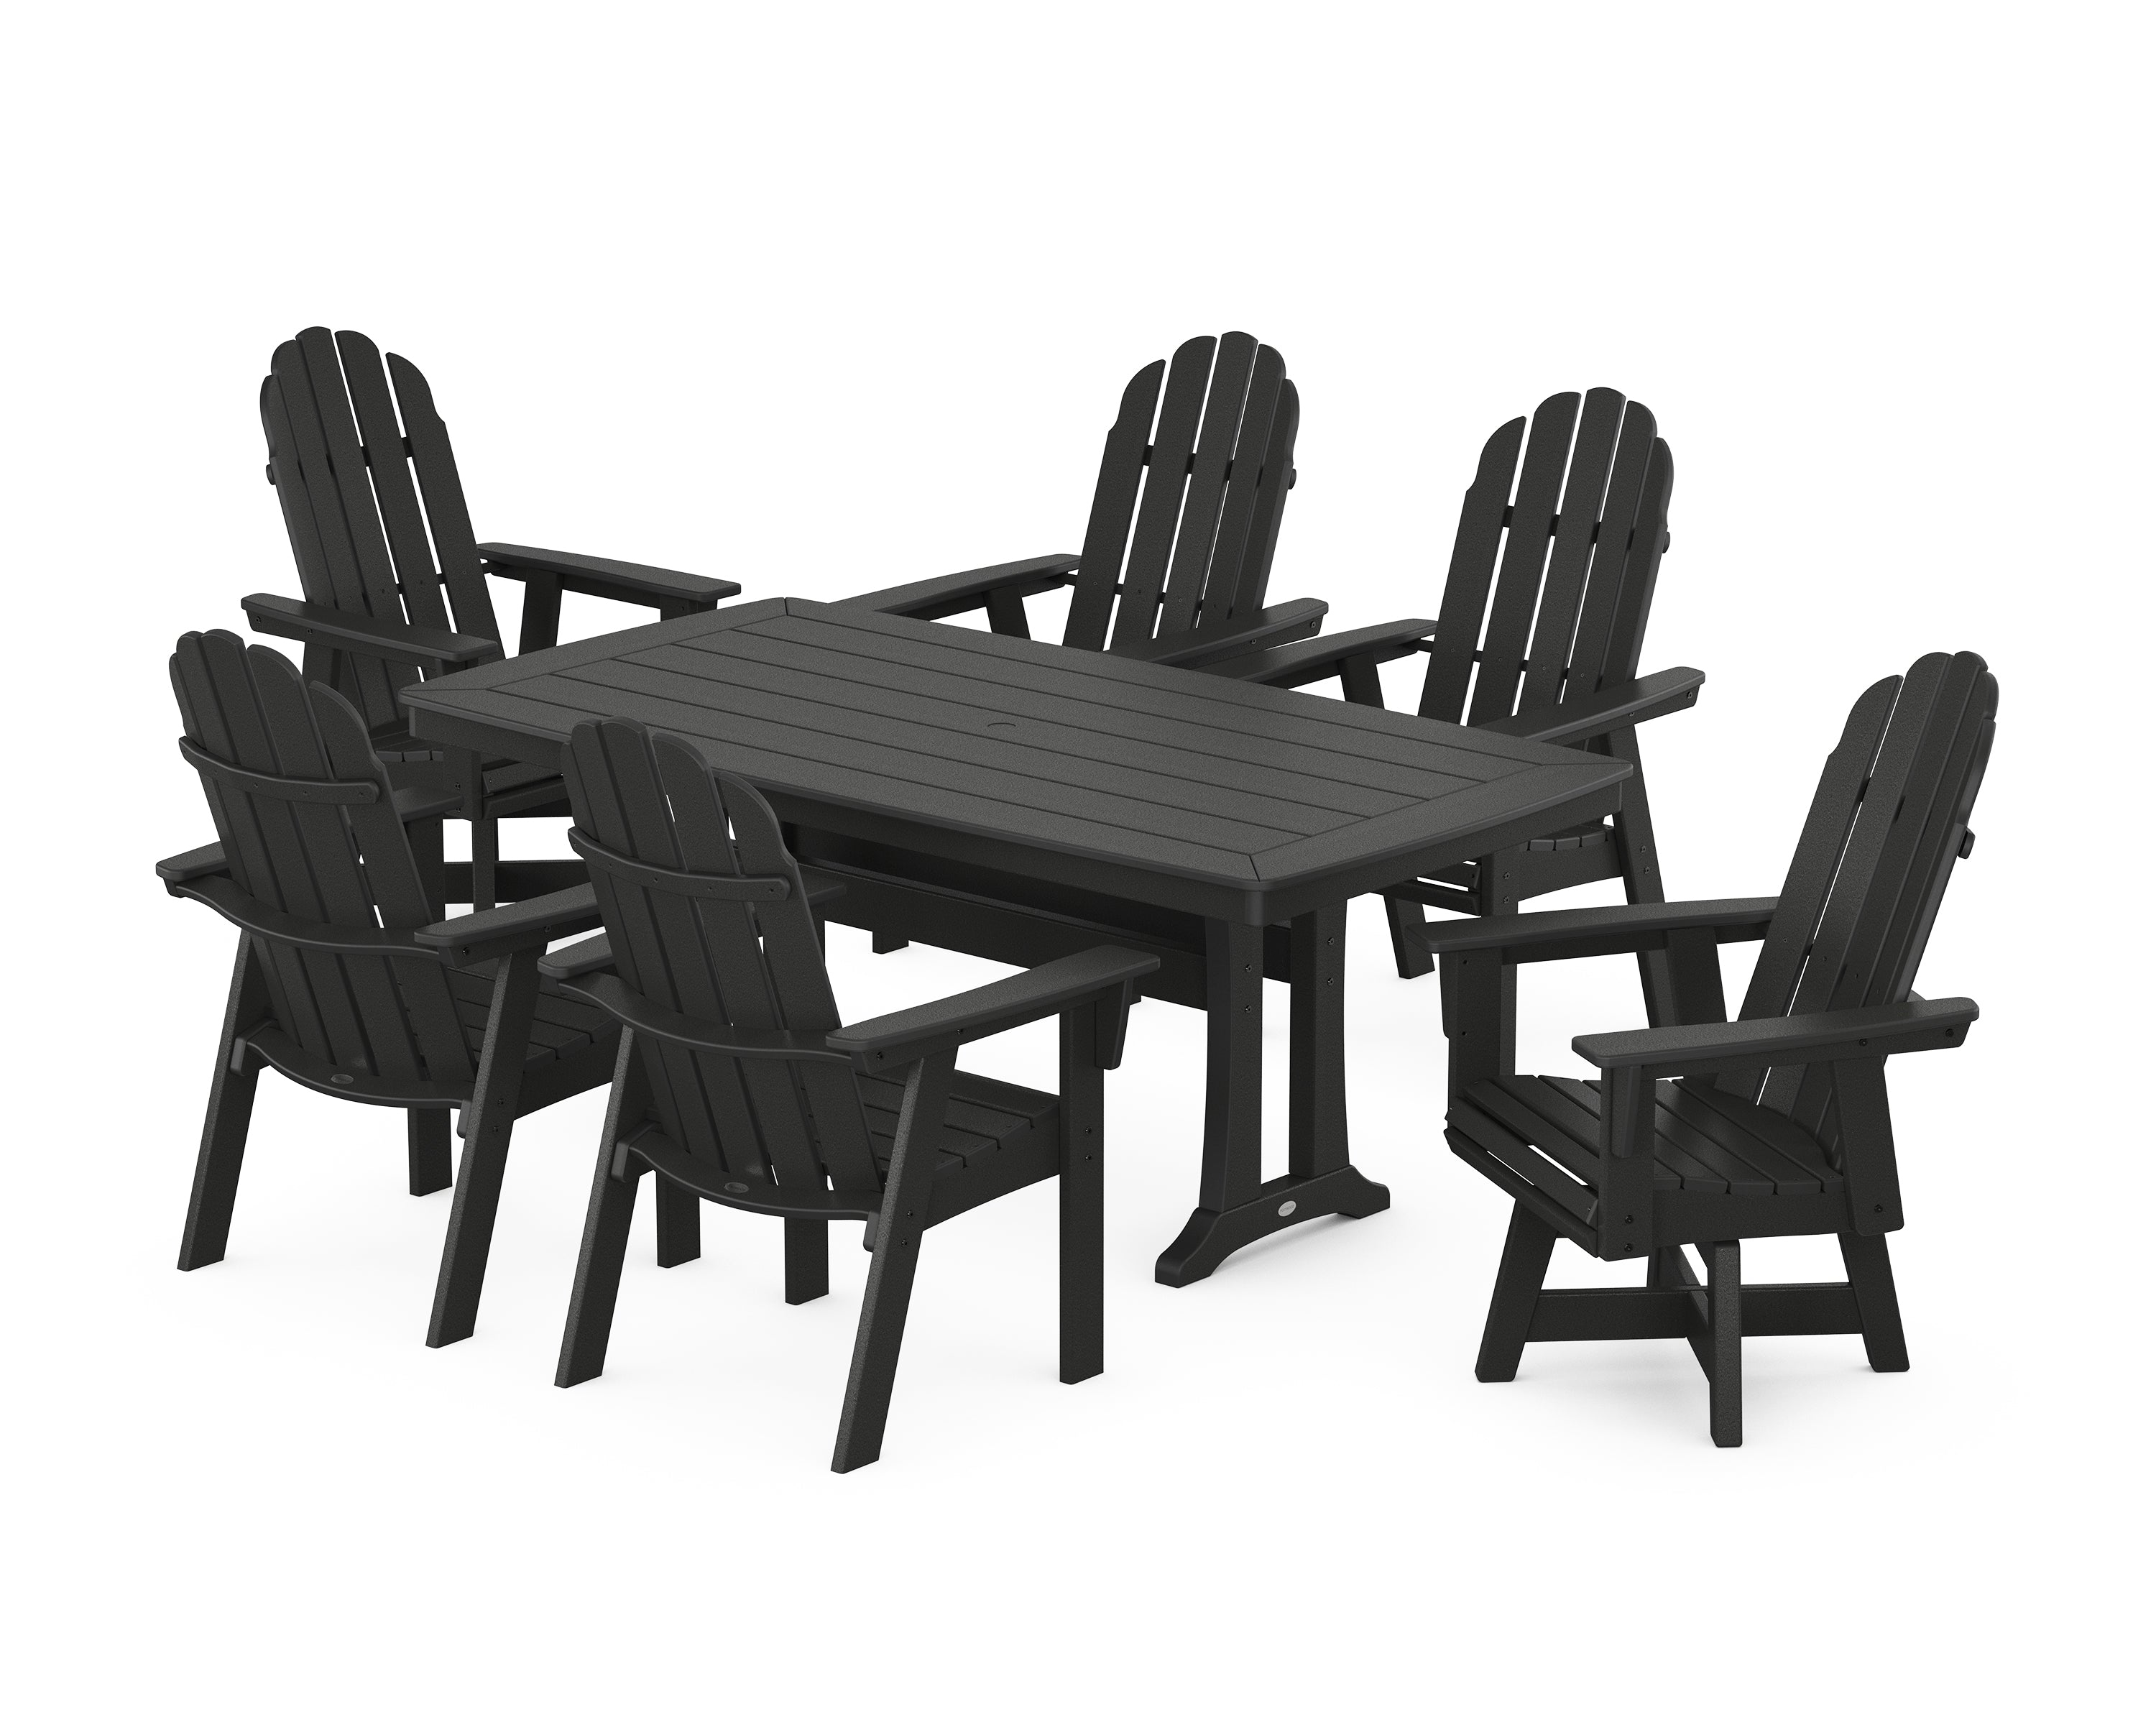 POLYWOOD® Vineyard Curveback Adirondack Swivel Chair 7-Piece Dining Set with Trestle Legs in Black